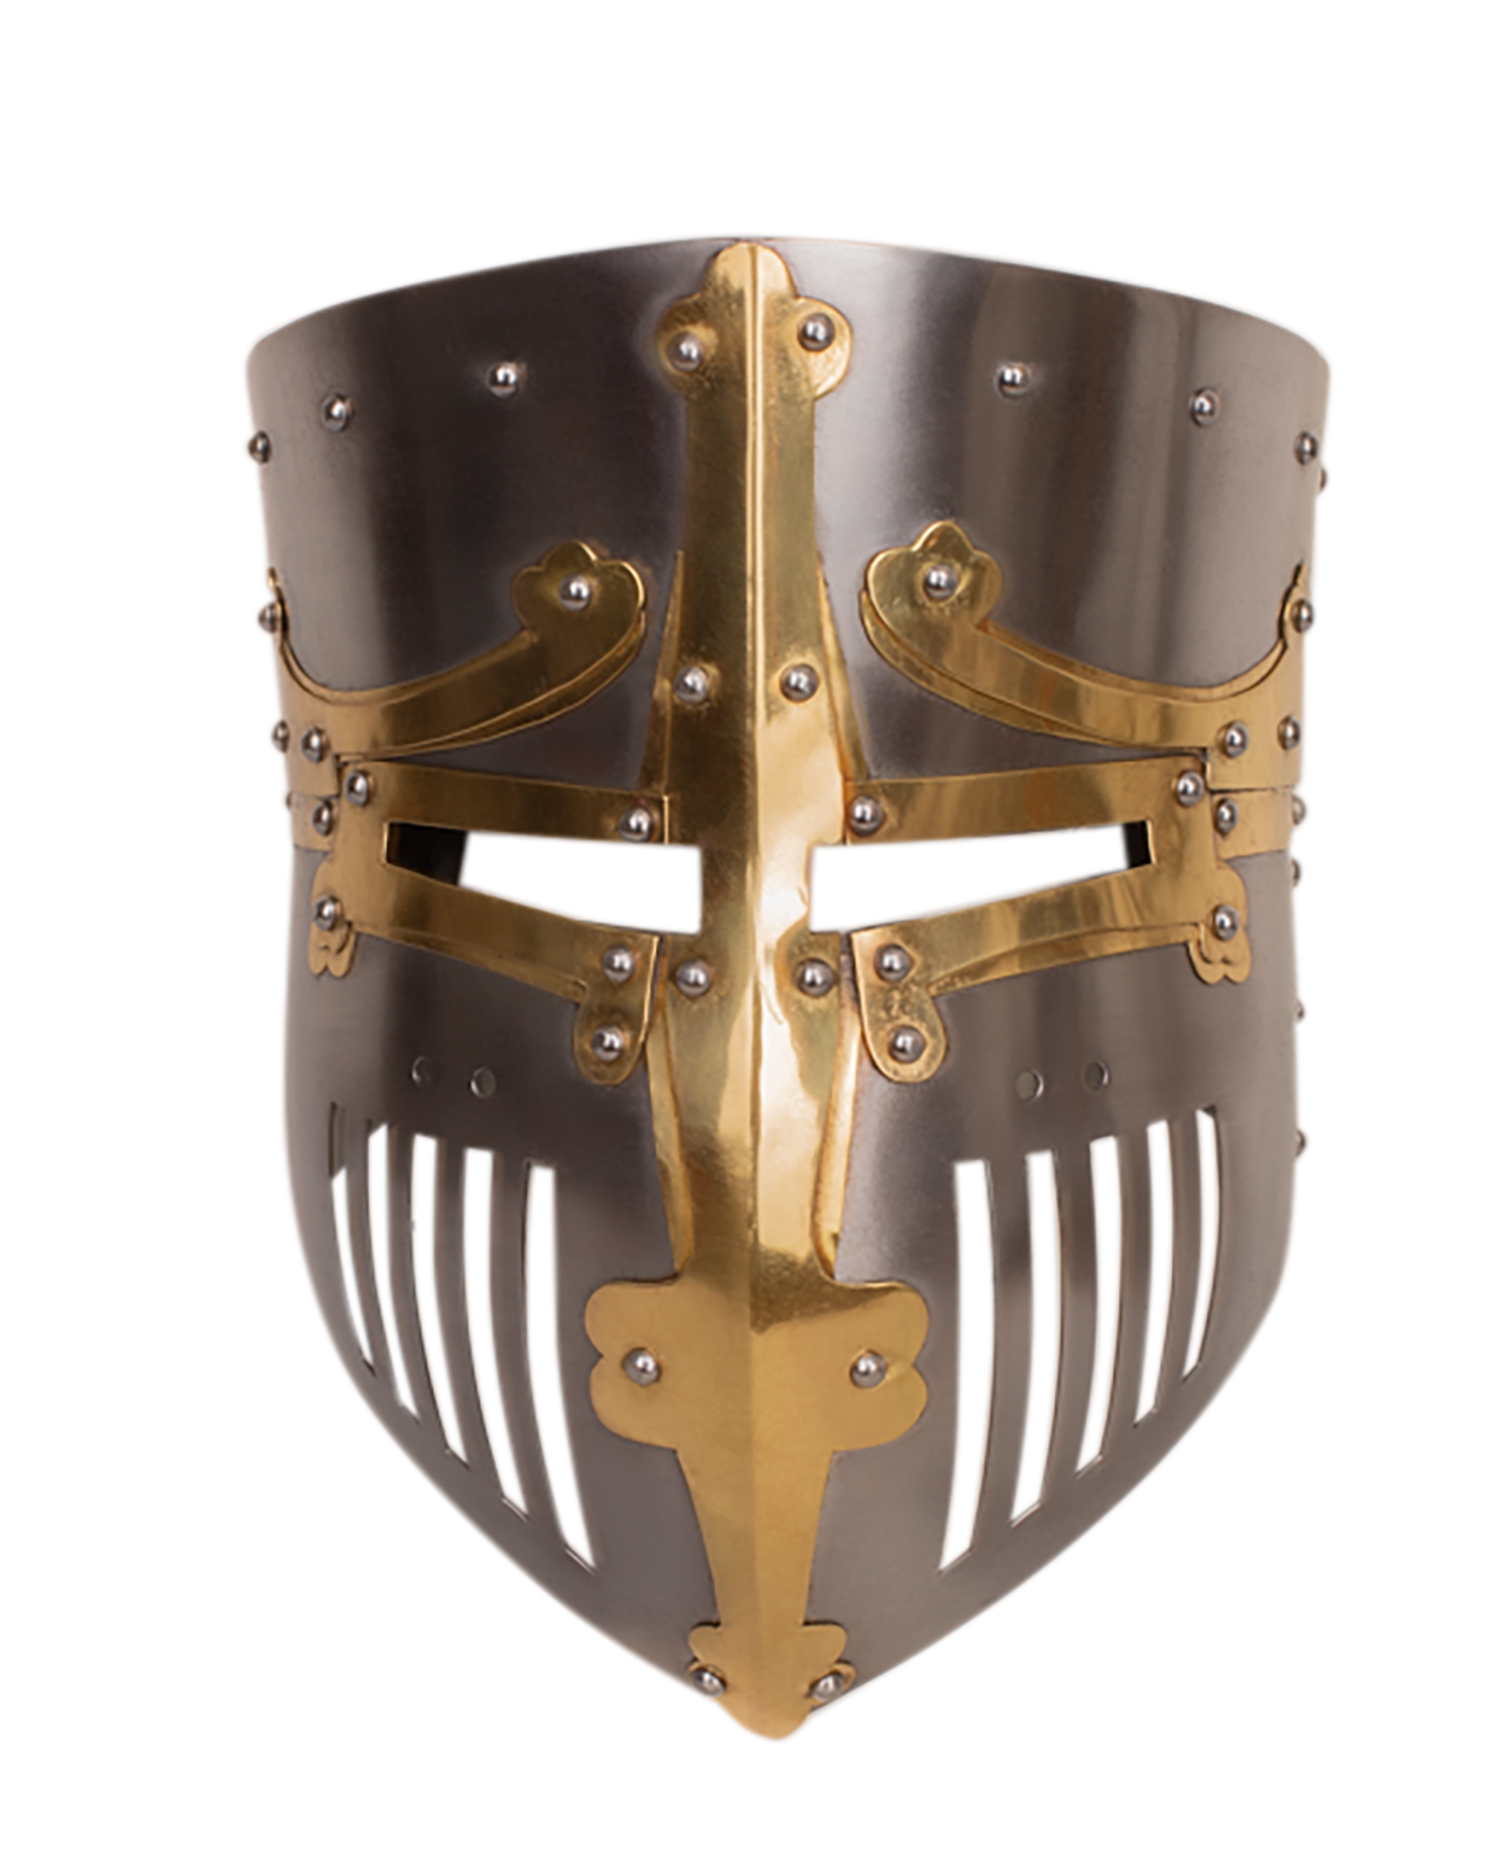 Gregory Crusader helmet